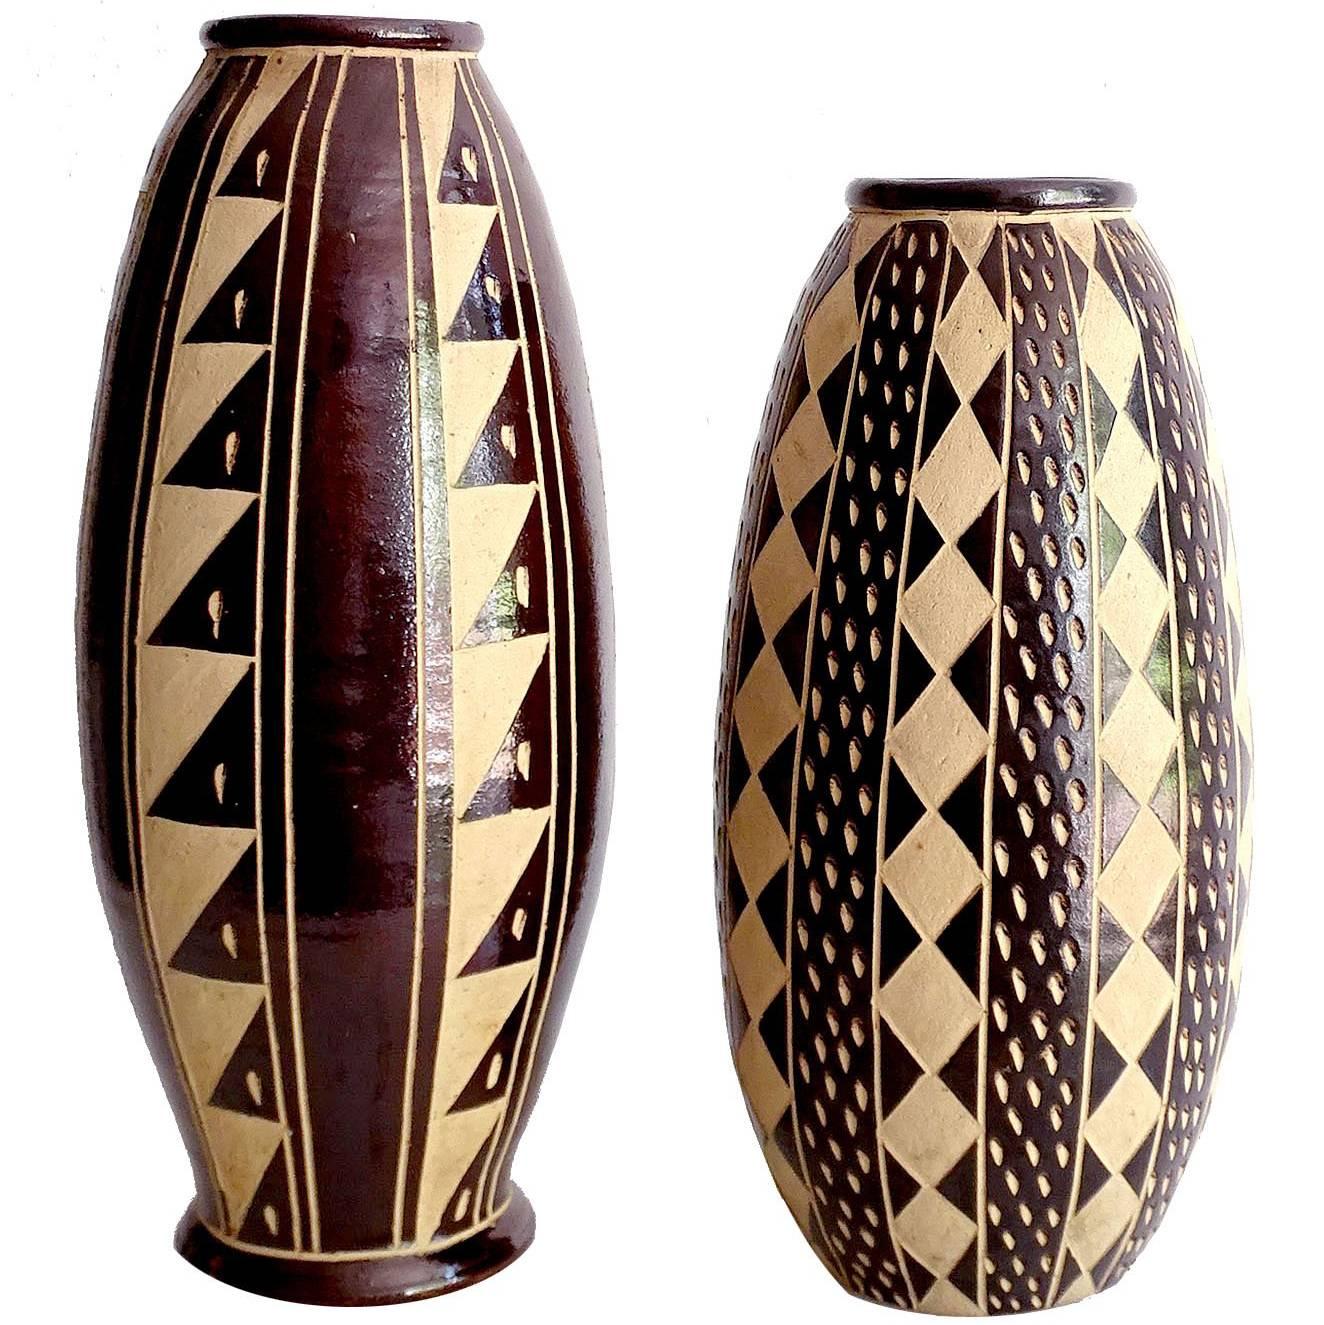 Striking Pair of Incised Brown Ceramic Amphora Vases, 1960s Modernist Design